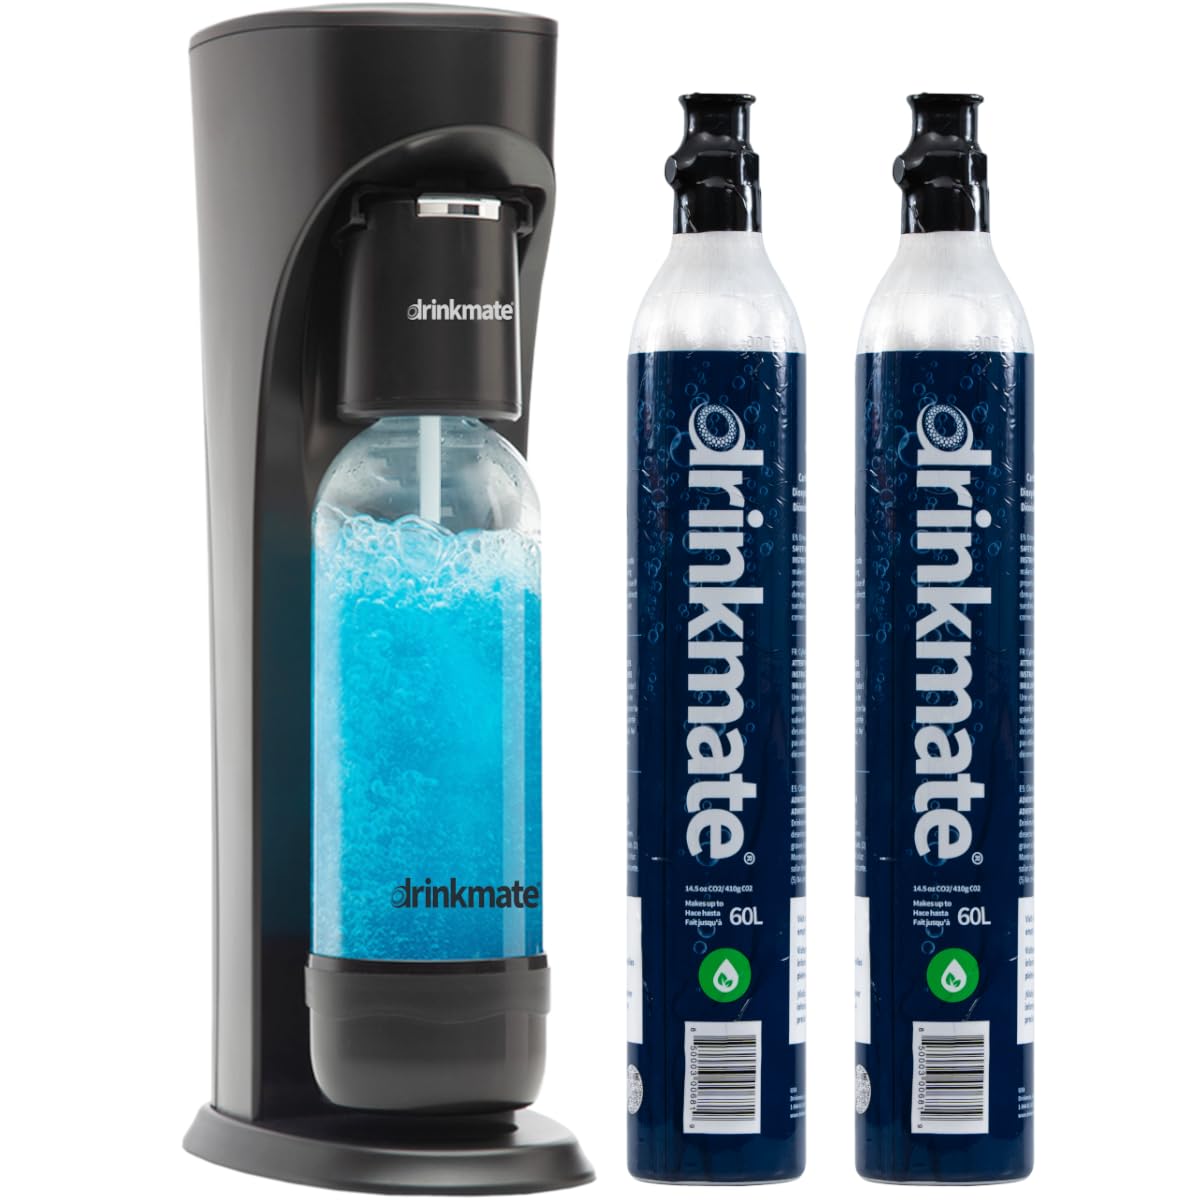 Sodastream vs Drinkmate: Carbonation Contrasts